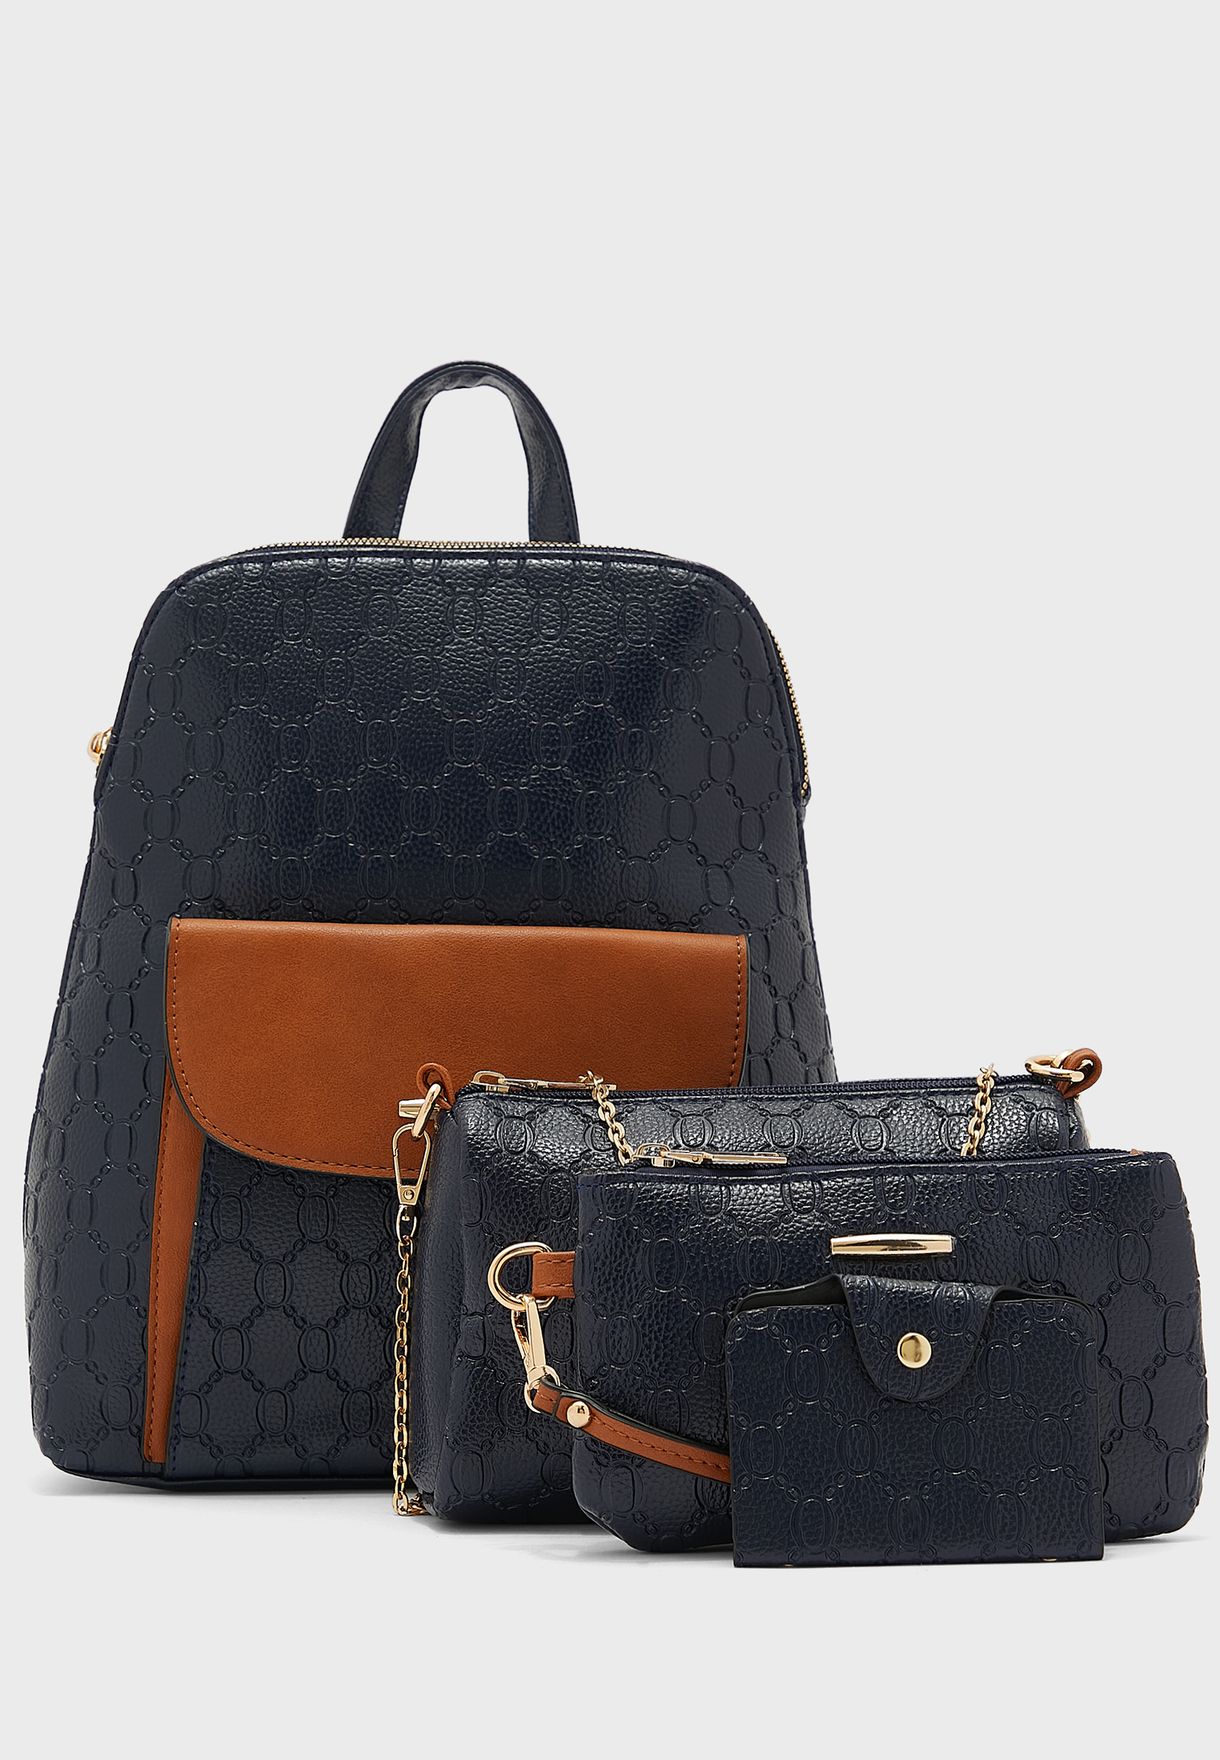 4 Piece Backpack And Handbag Set